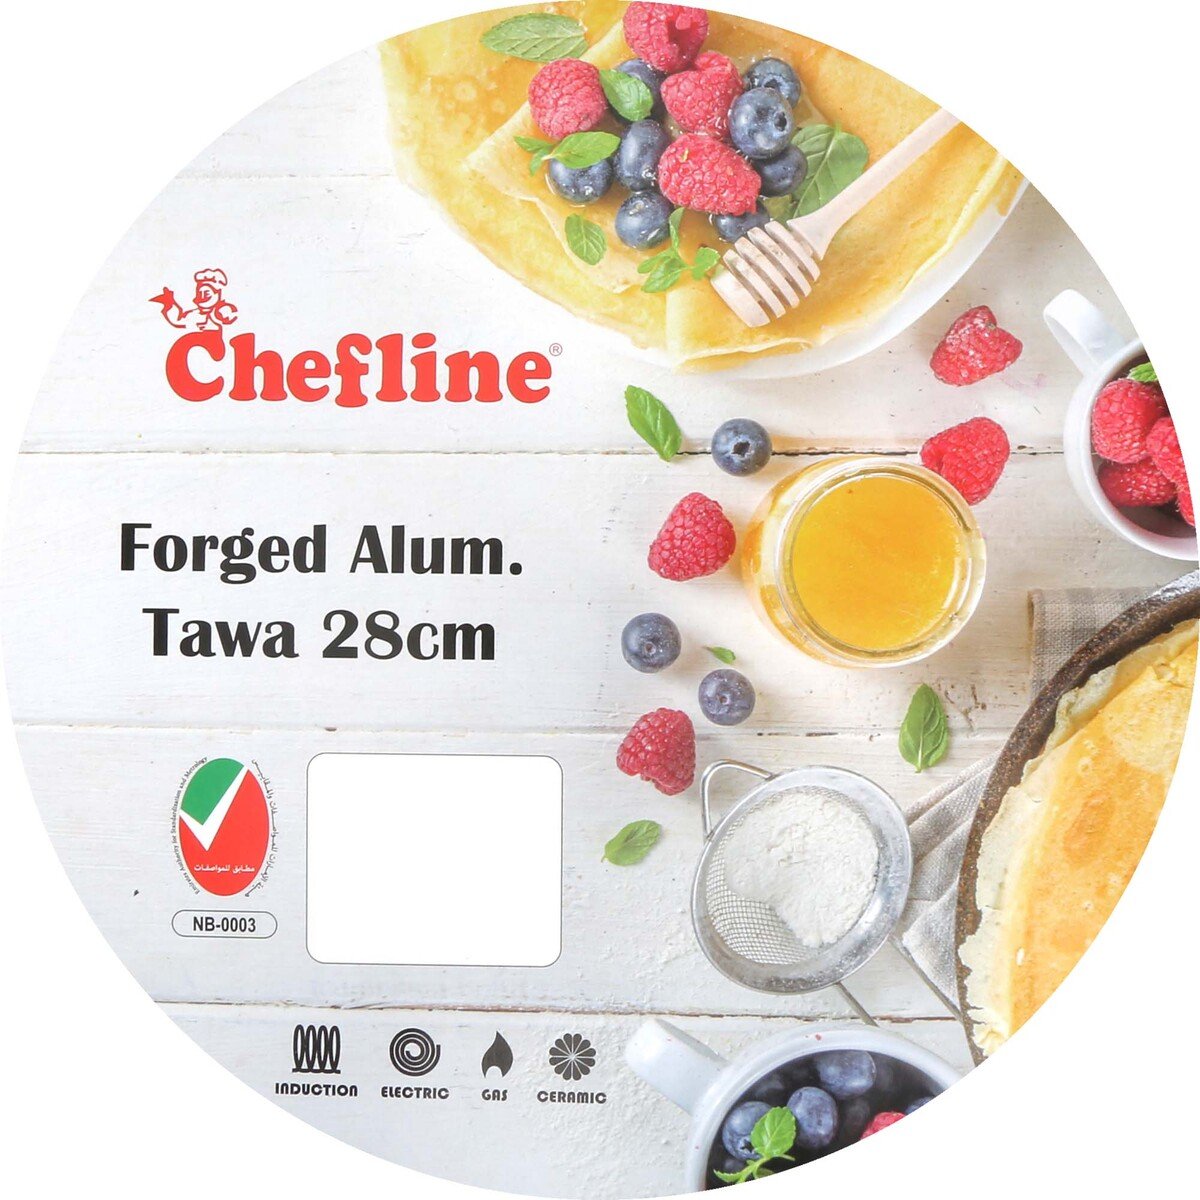 Chefline Forged Aluminium Tawa, 28 cm, MK728